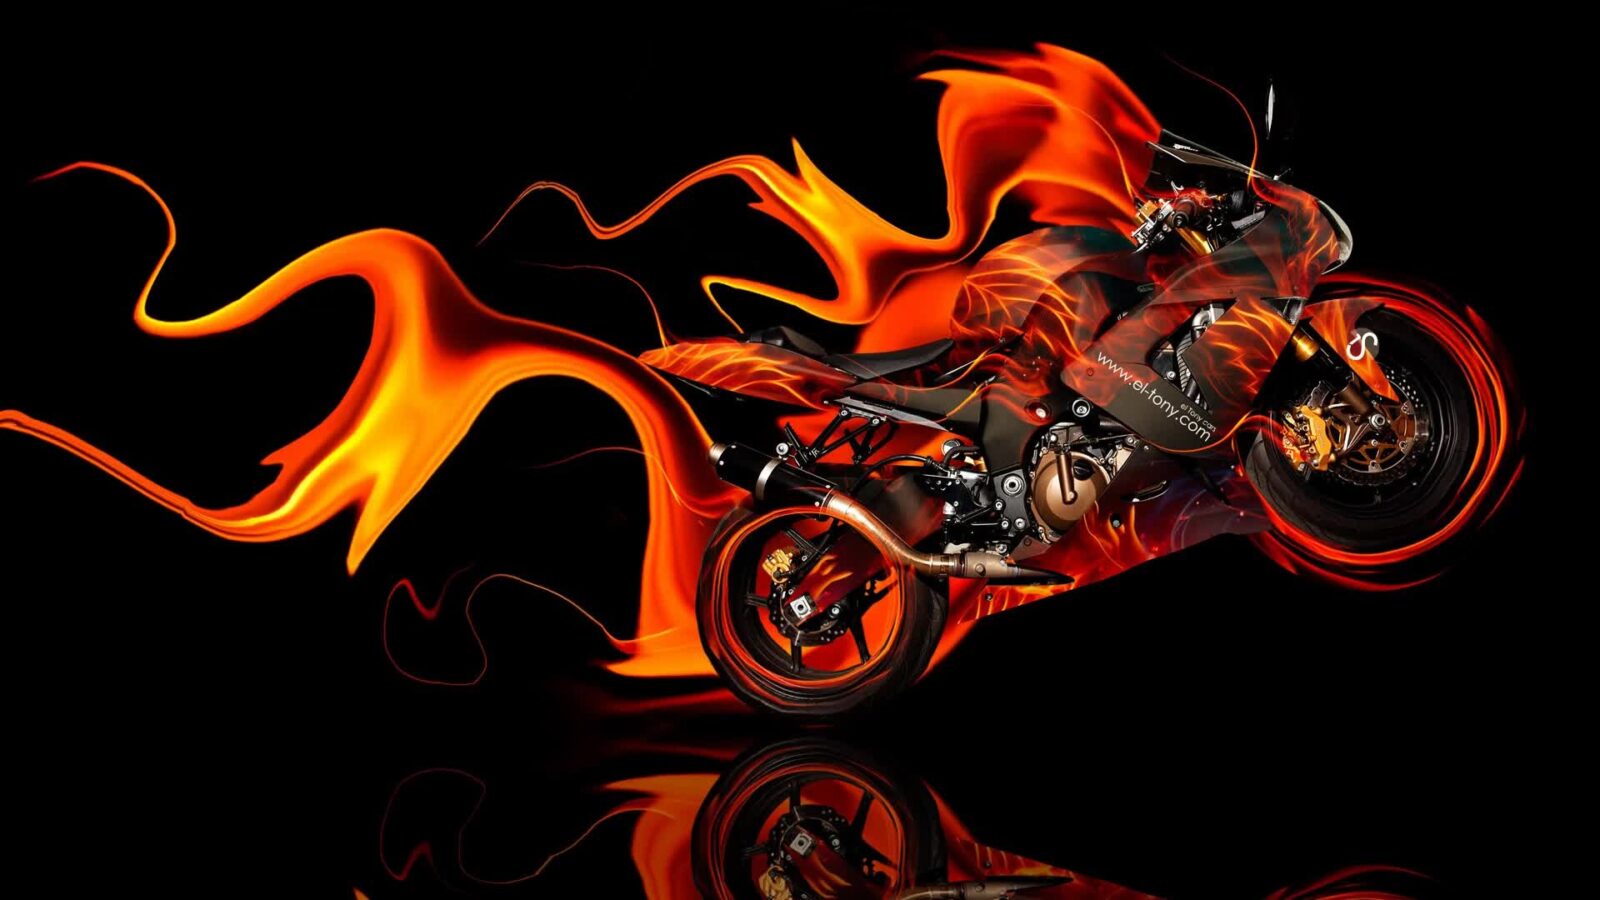 Moto Kawasaki In Fire Tony Kokhan - Free Live Wallpaper